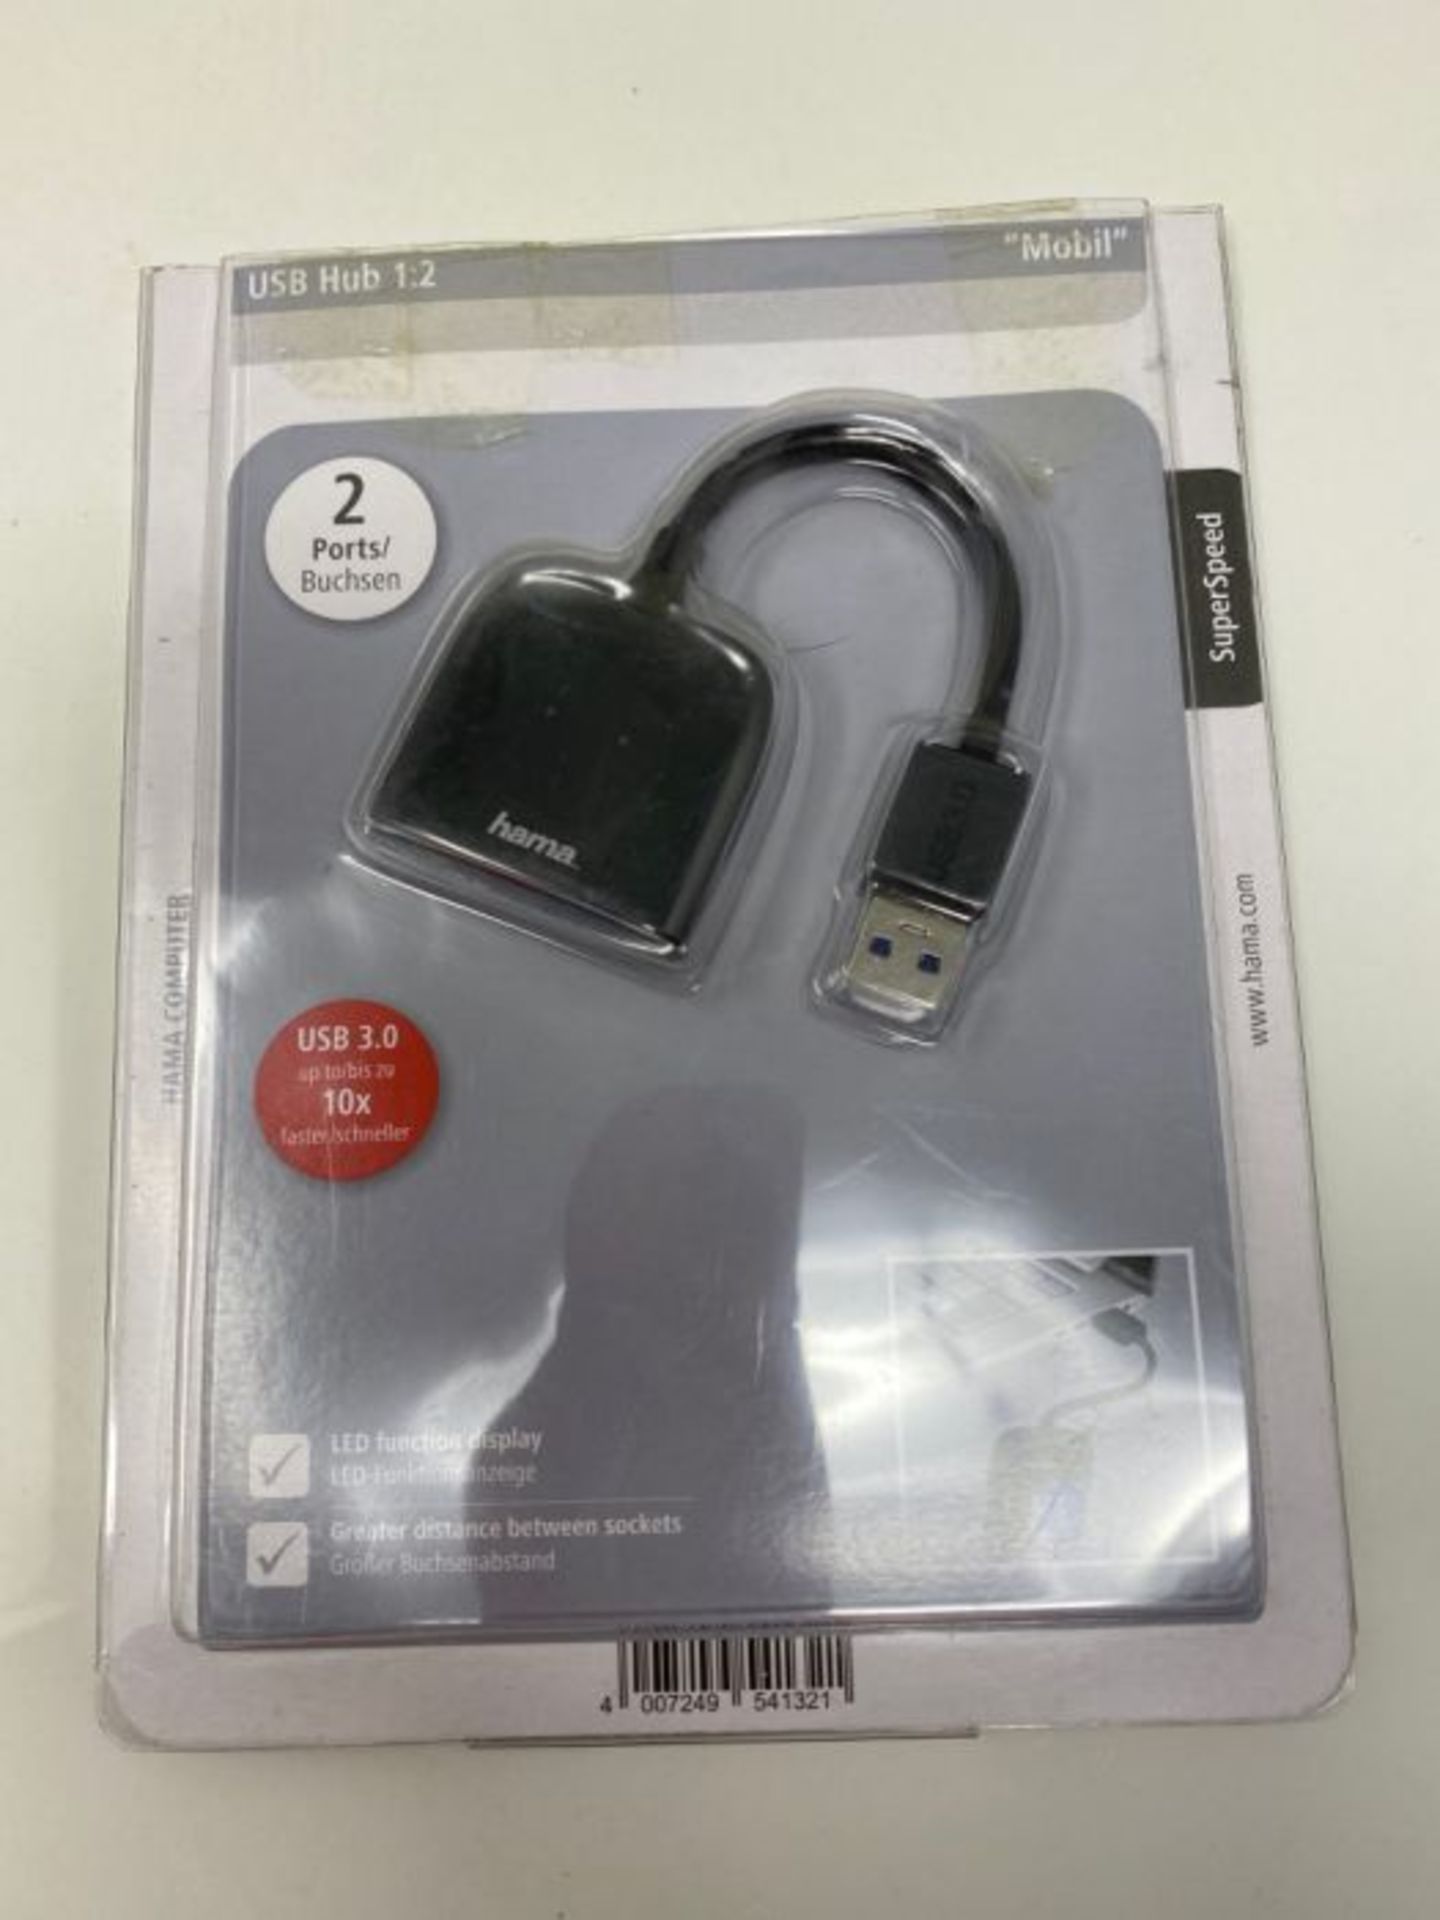 Hama | 1:2 00054132 USB 3.0 Hub/Card Reader for Mobile Phone | Black - Image 2 of 2